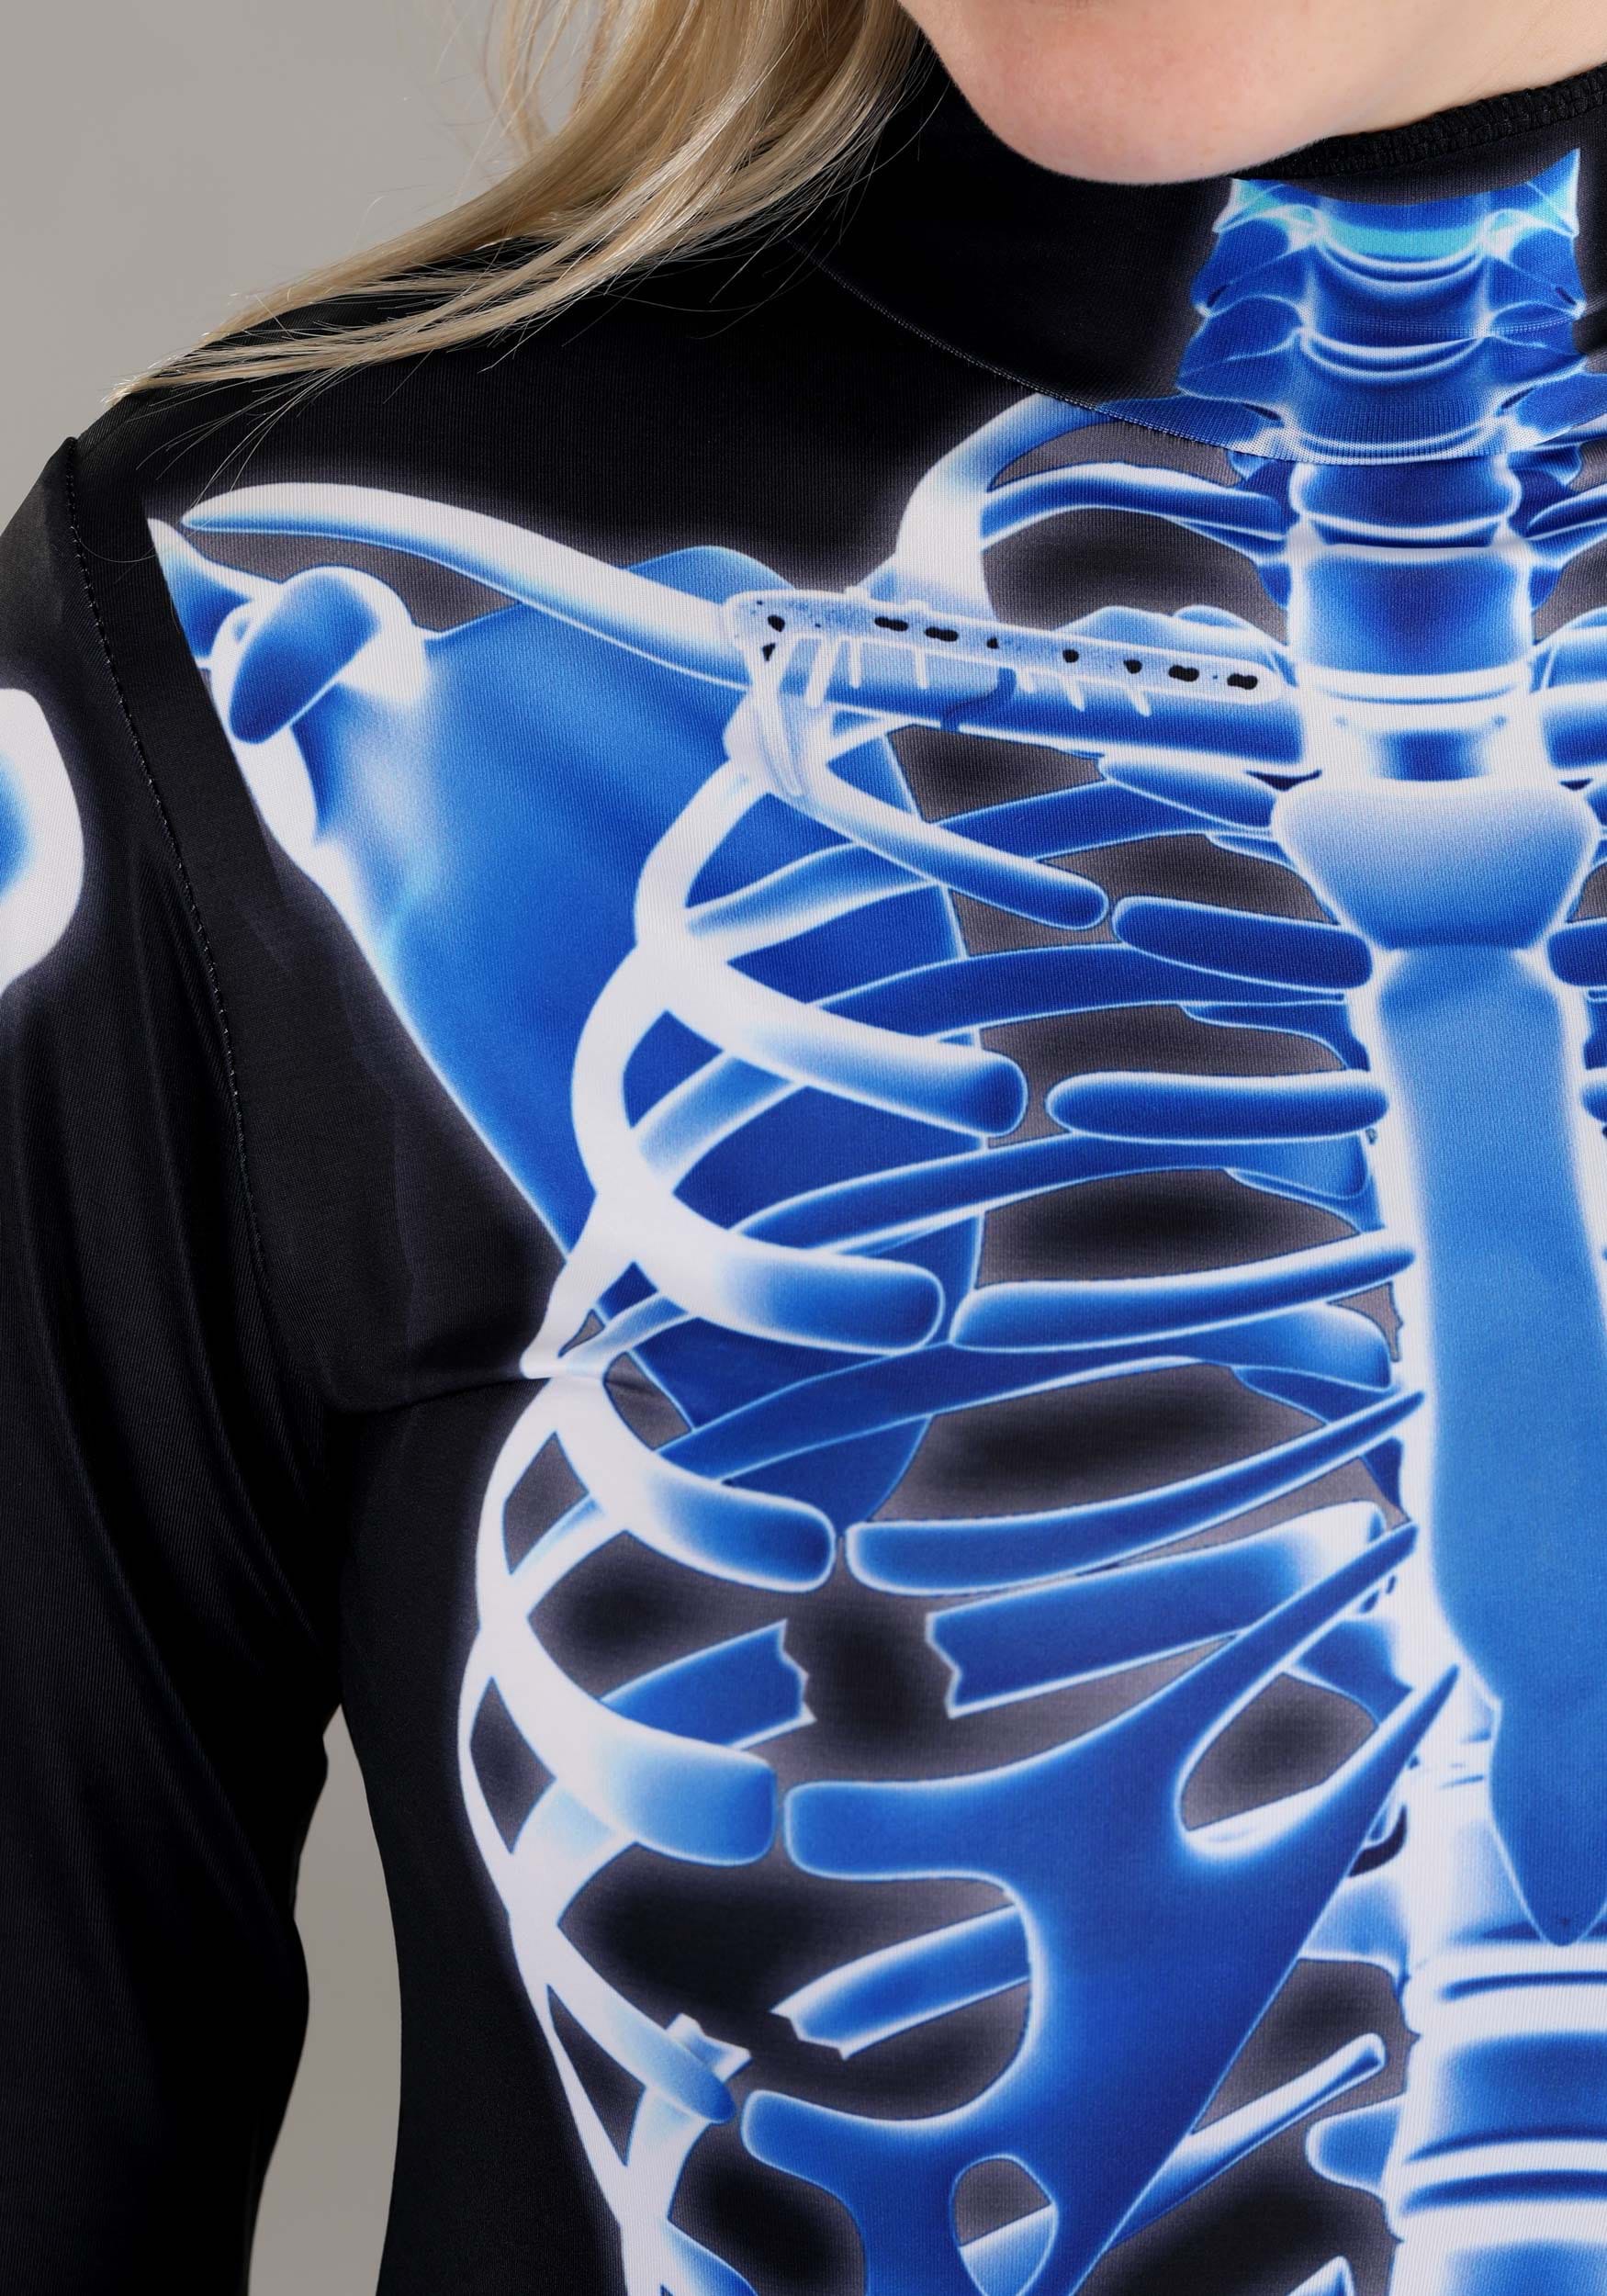 X-Ray Skeleton Jumpsuit Fancy Dress Costume For Women